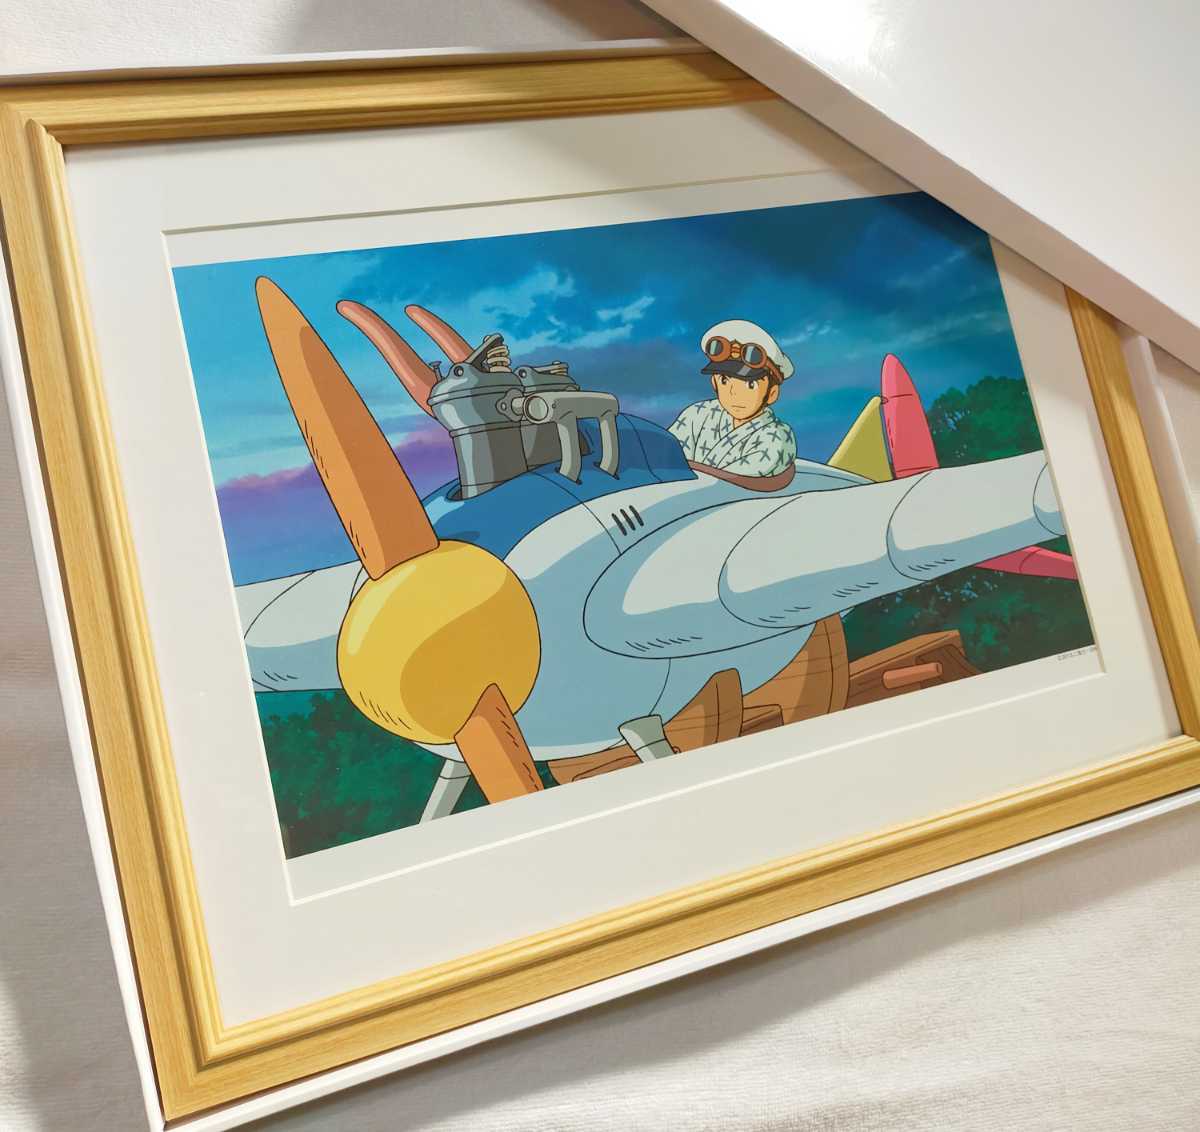 Super selten! Studio Ghibli The Wind Rises [gerahmter Artikel] Ghibli Poster, Ghibli-Gemälde, Originalreproduktion, Postkarte, Ghibli-Kalender, Hayao Miyazaki, Comics, Anime-Waren, Andere